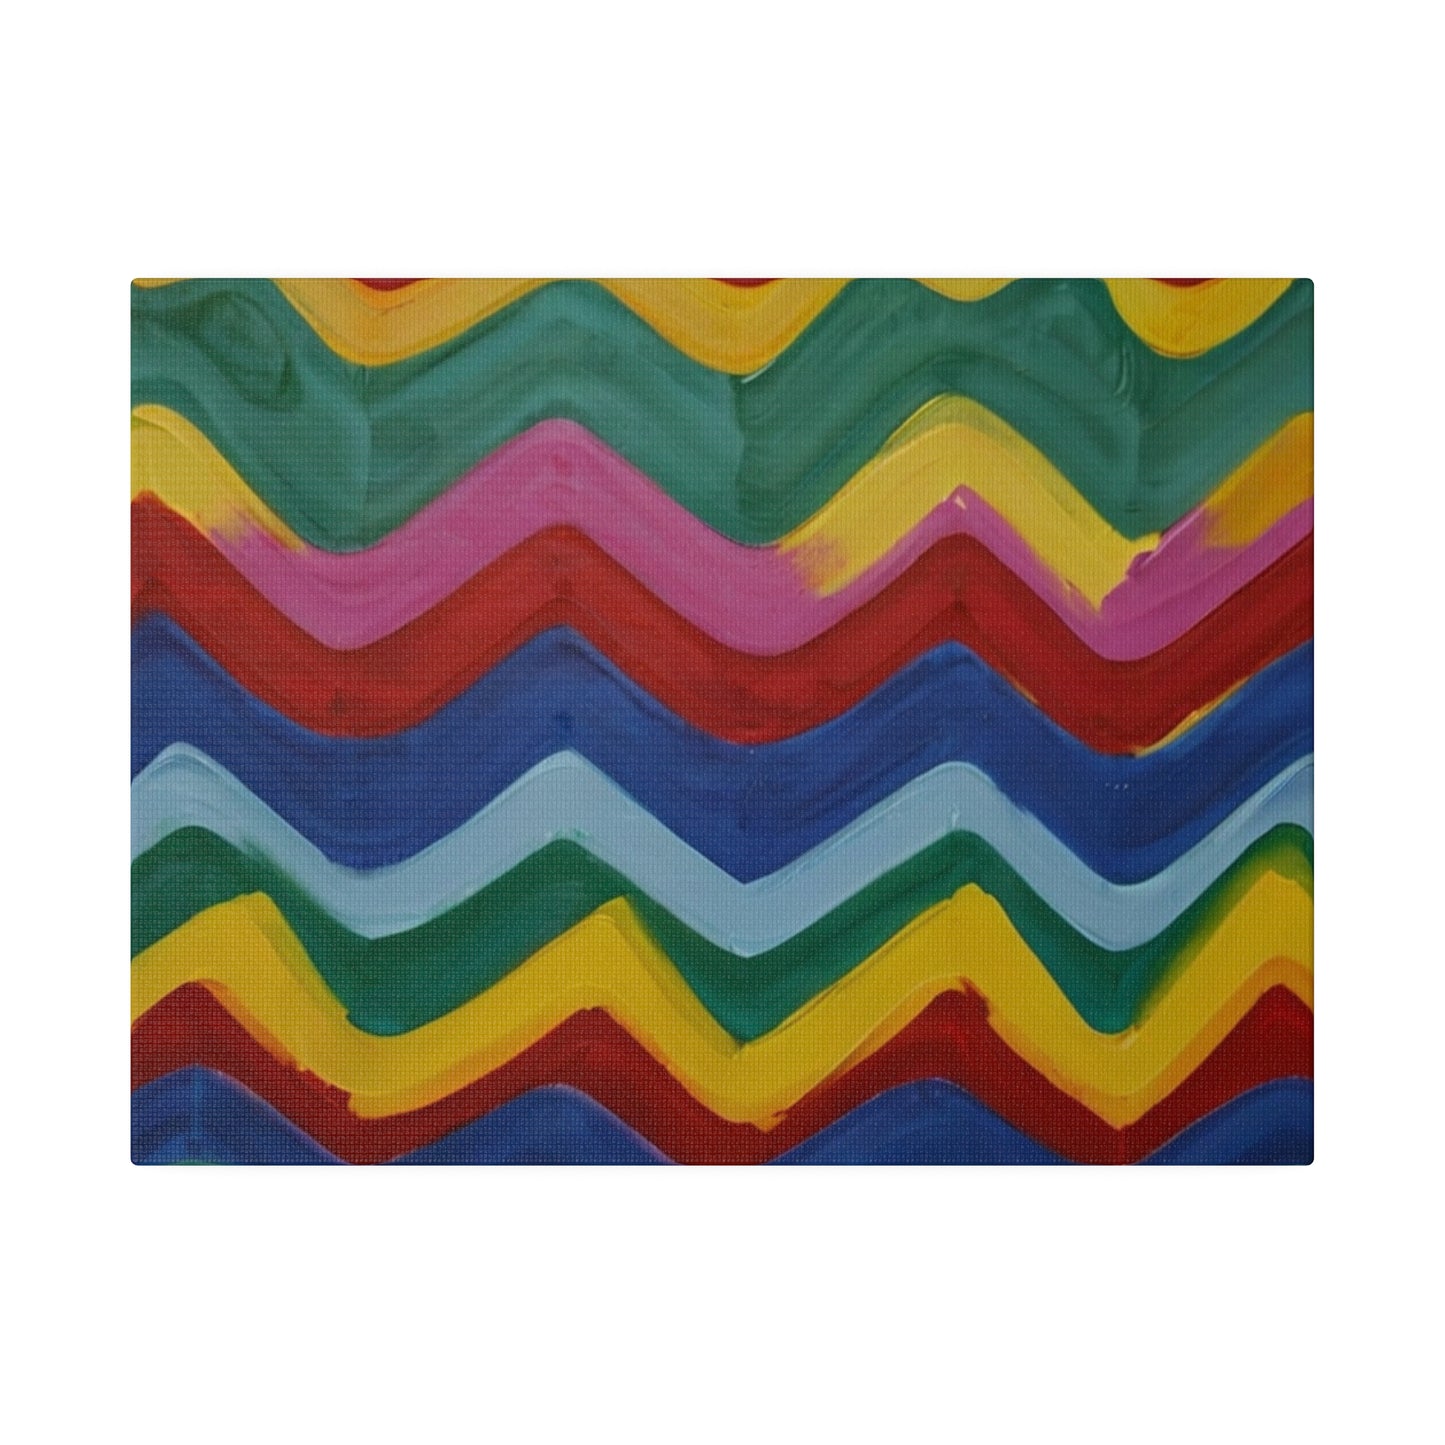 Colourful Paint Zigzags Canvas - Matte Canvas, Stretched, 0.75"